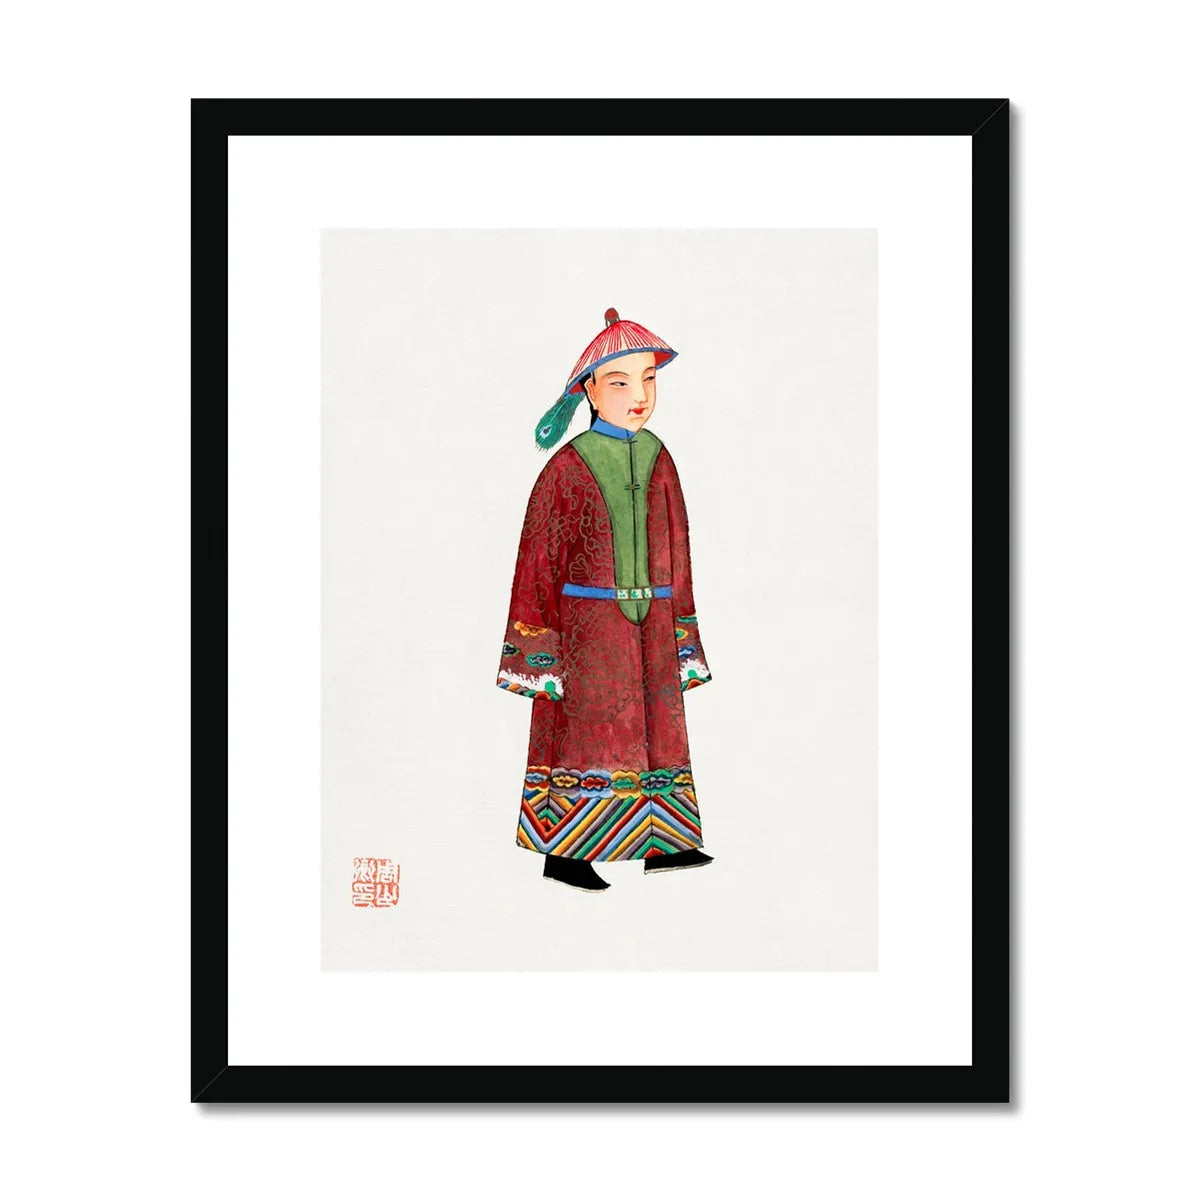 Chinese Dandy Framed & Mounted Print - 16’x20’ / Black Frame - Posters Prints & Visual Artwork - Aesthetic Art